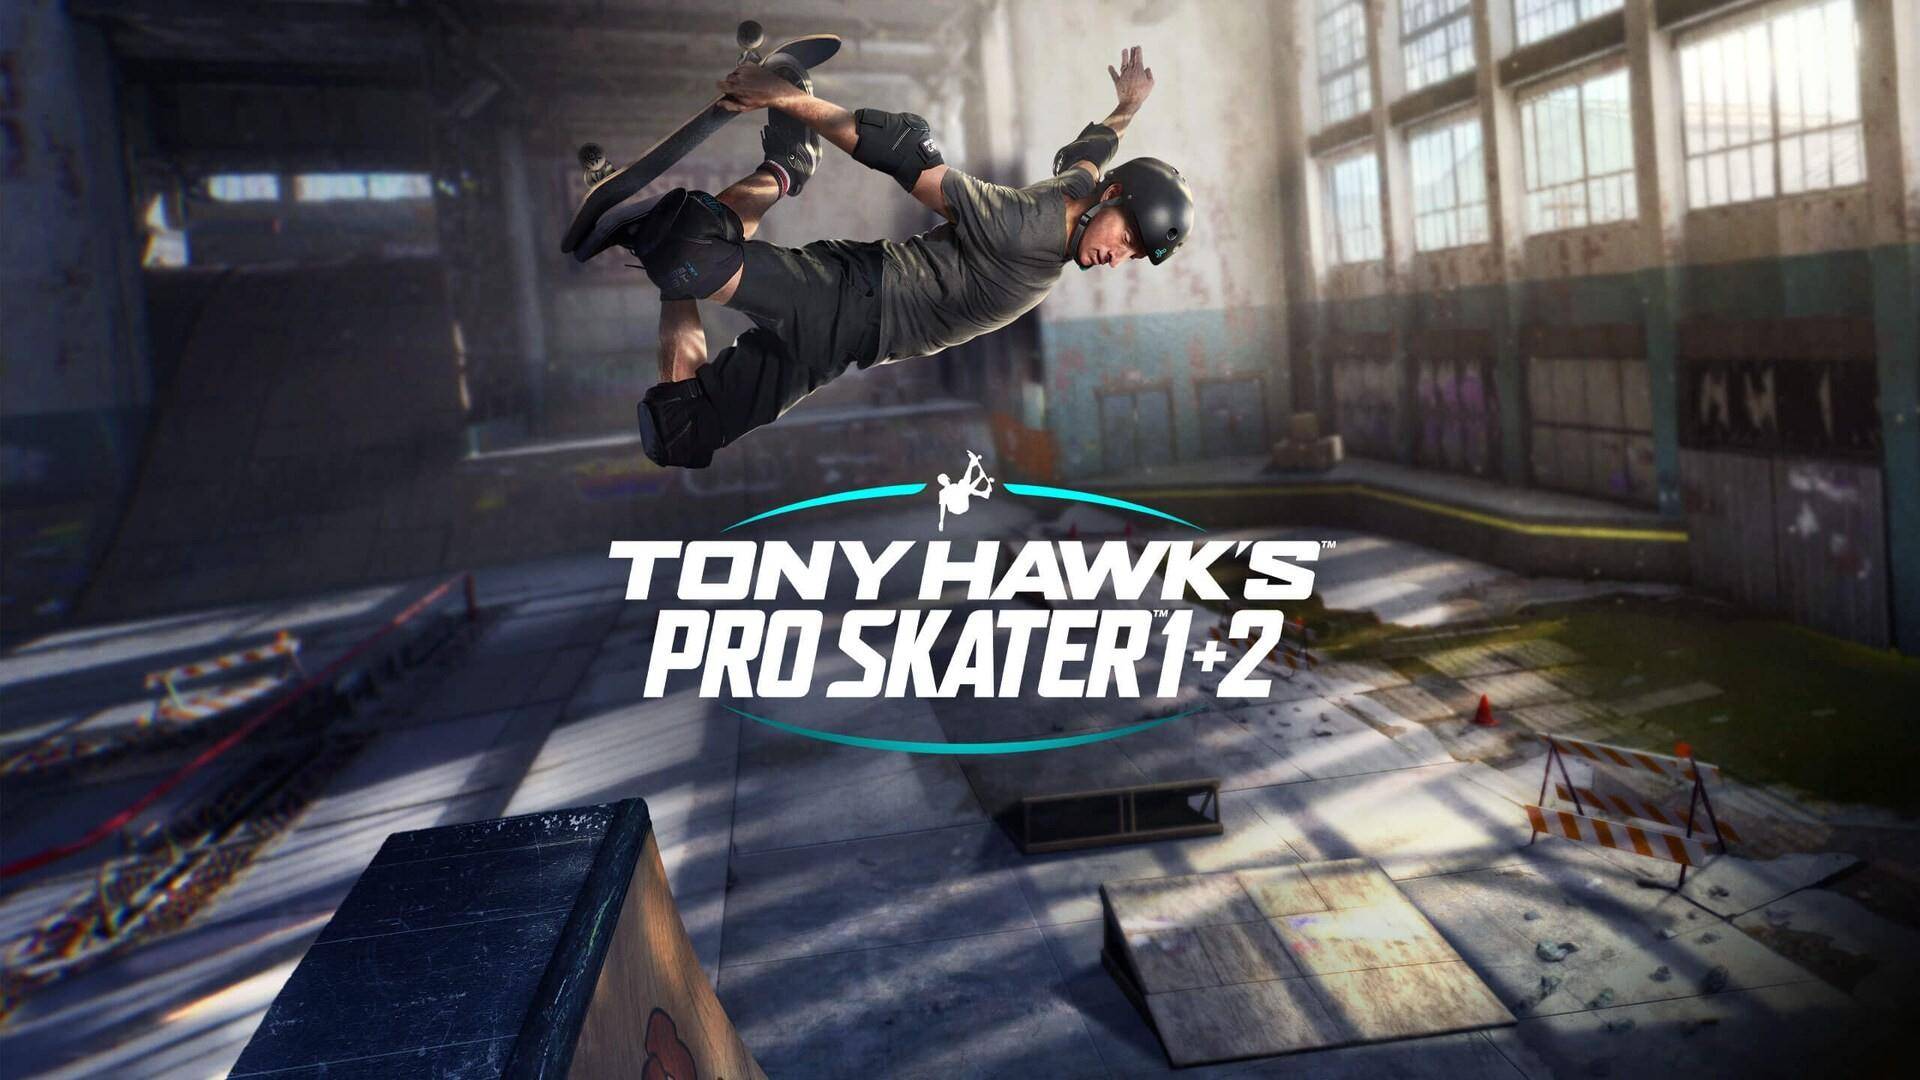 Prueba gratis Tony Hawk's Pro Skater 1 + 2